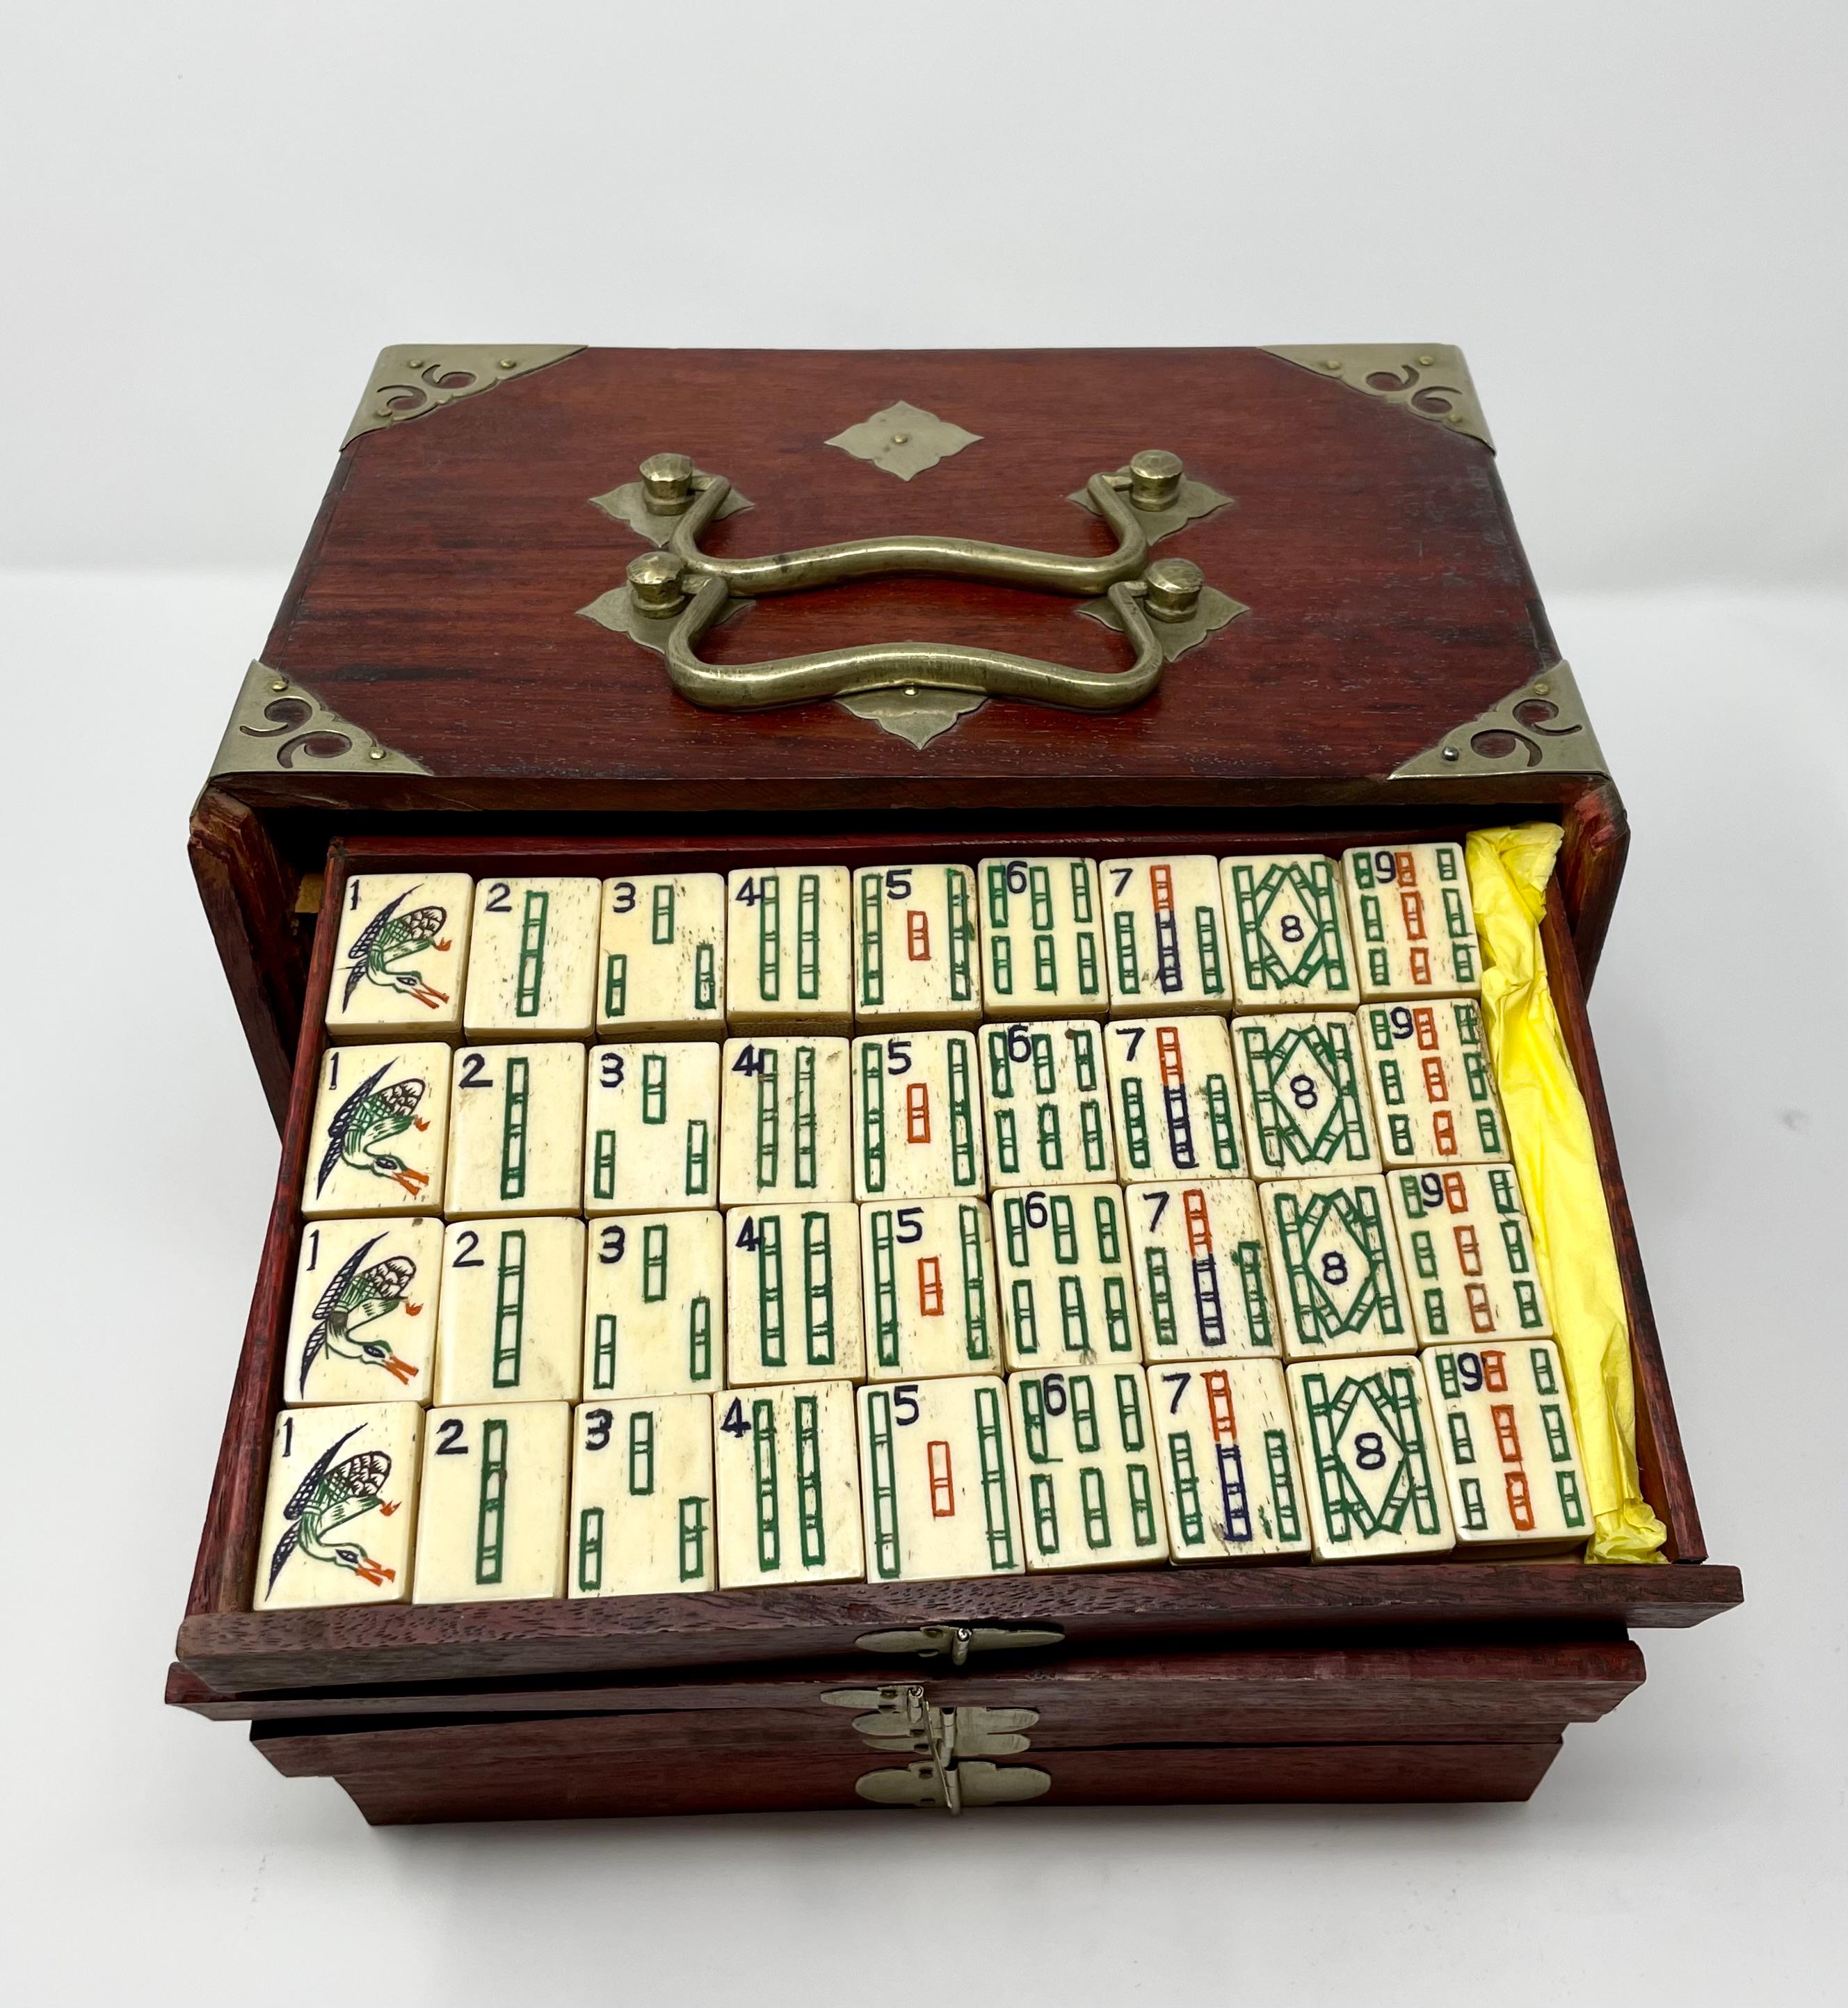 used mahjong sets for sale